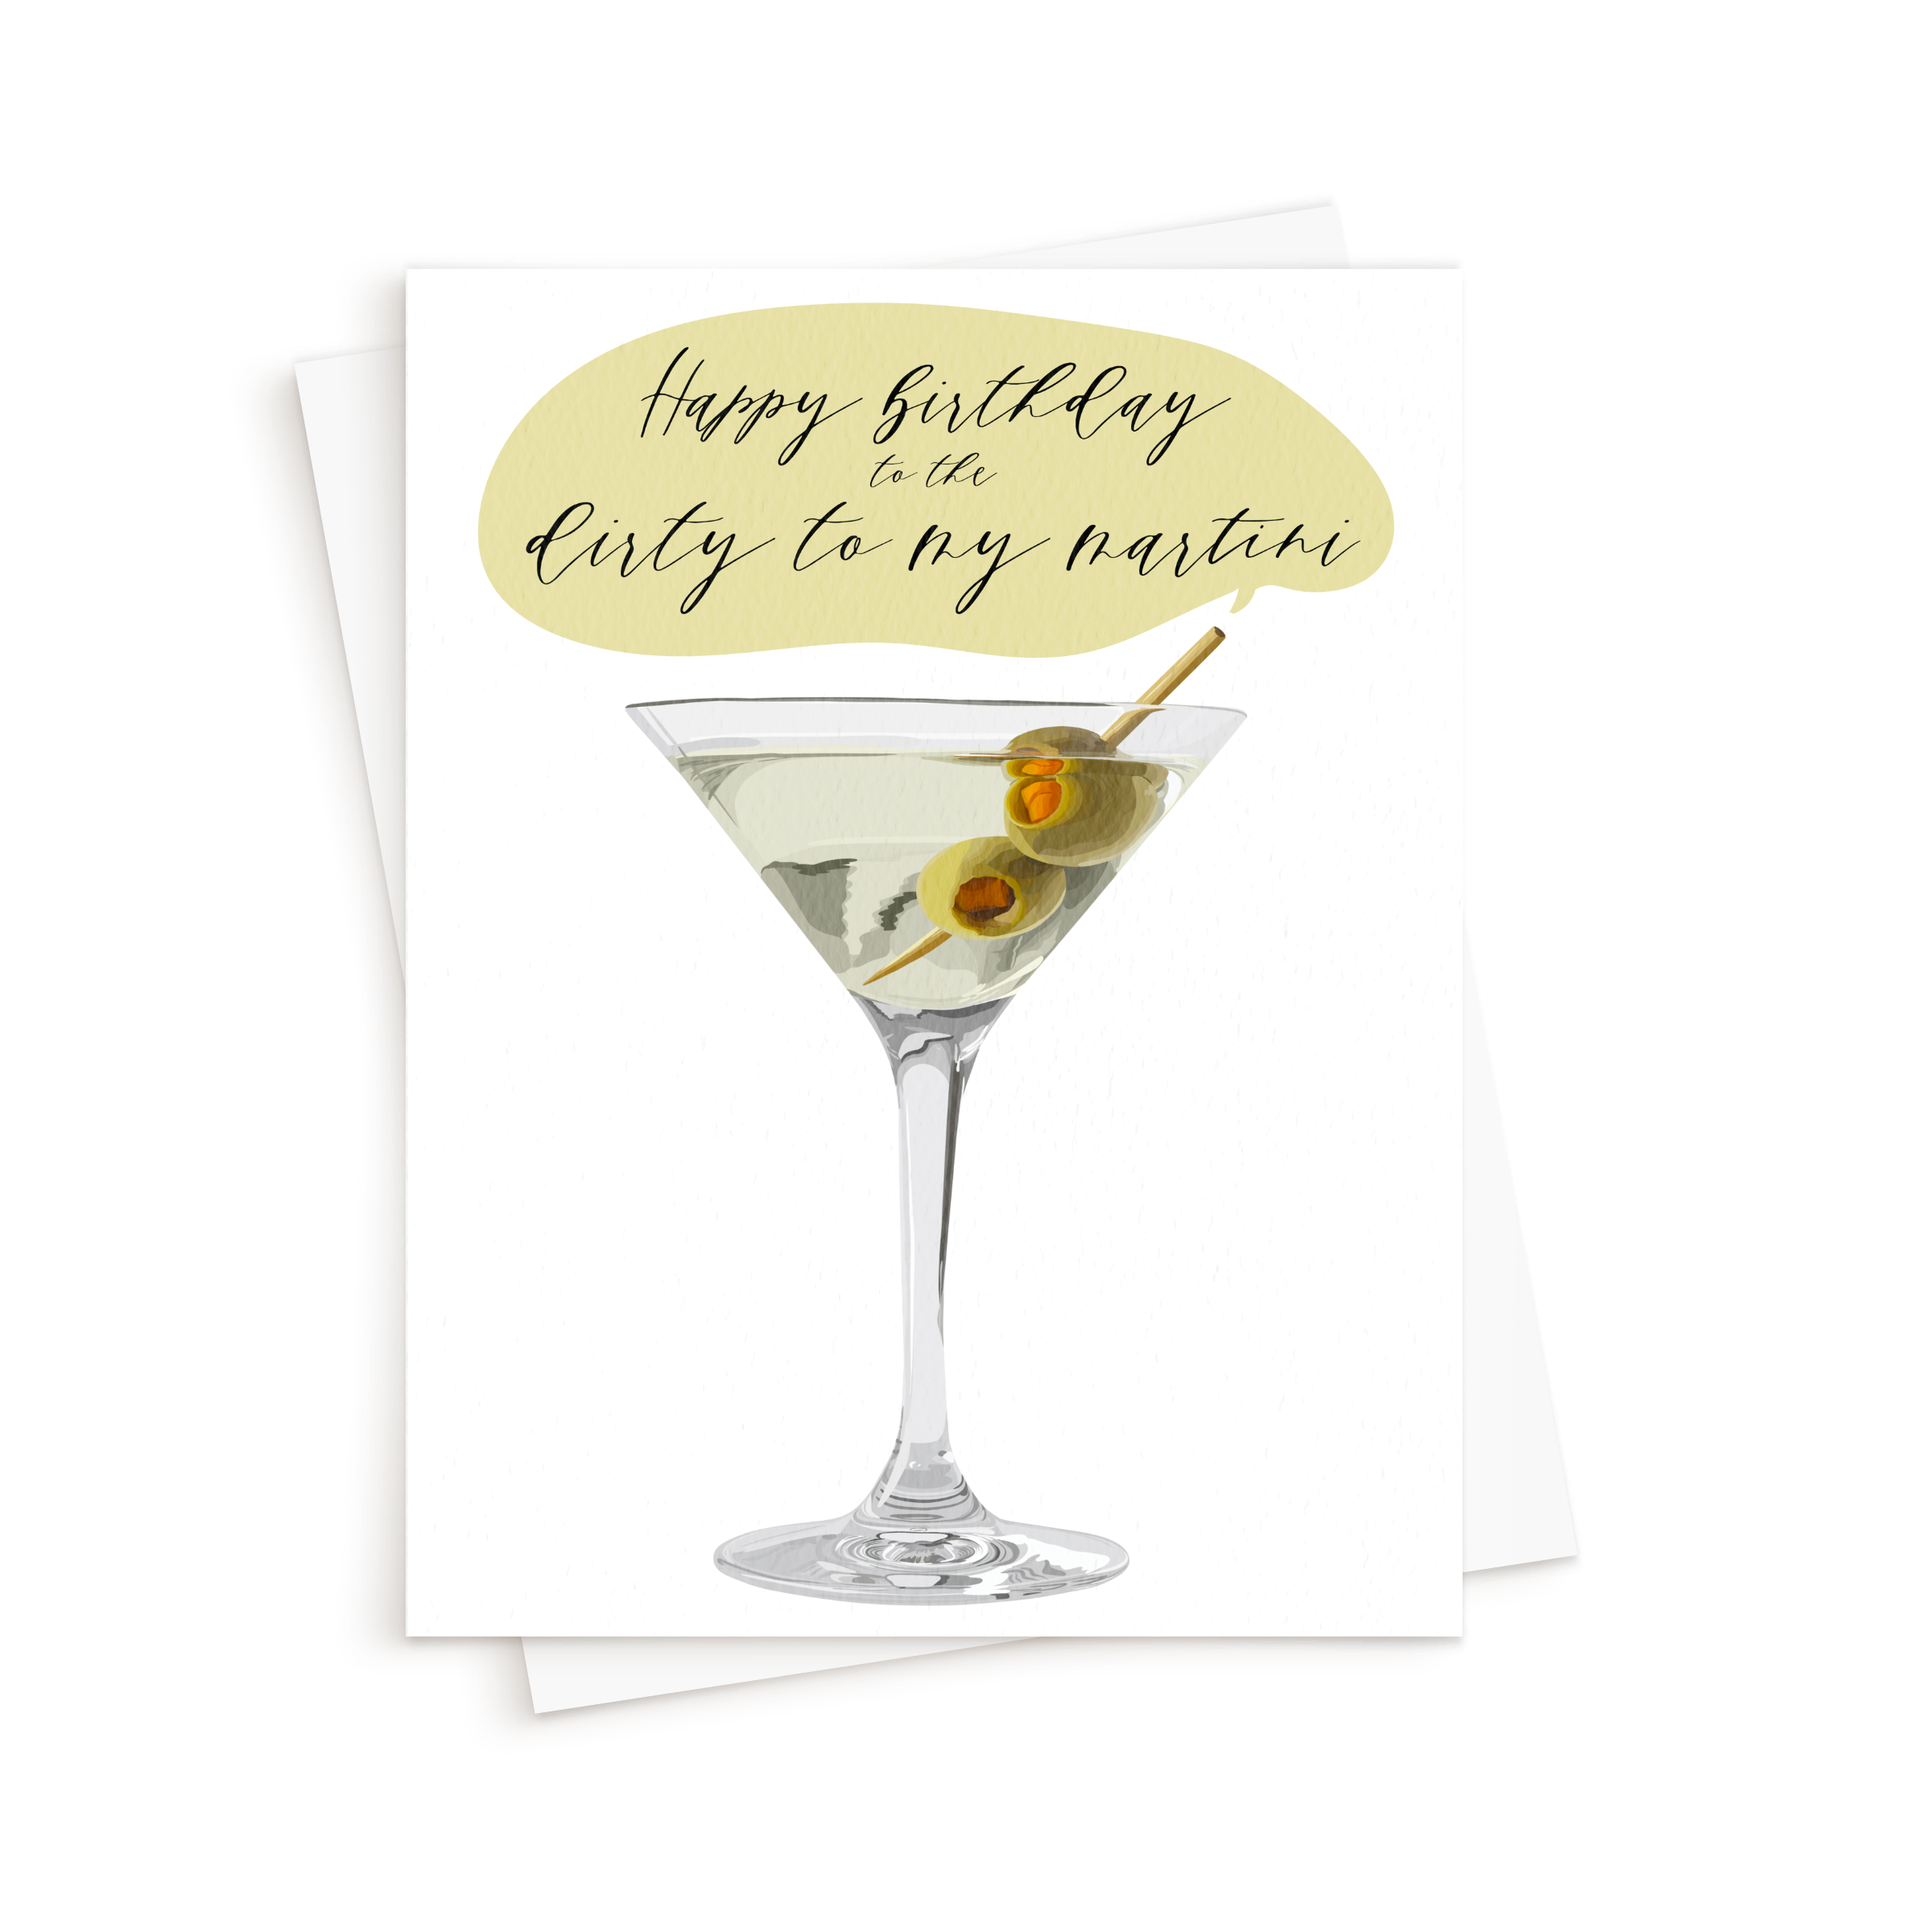 birthday cake martini! - Picture of The Kerryman, Chicago - Tripadvisor